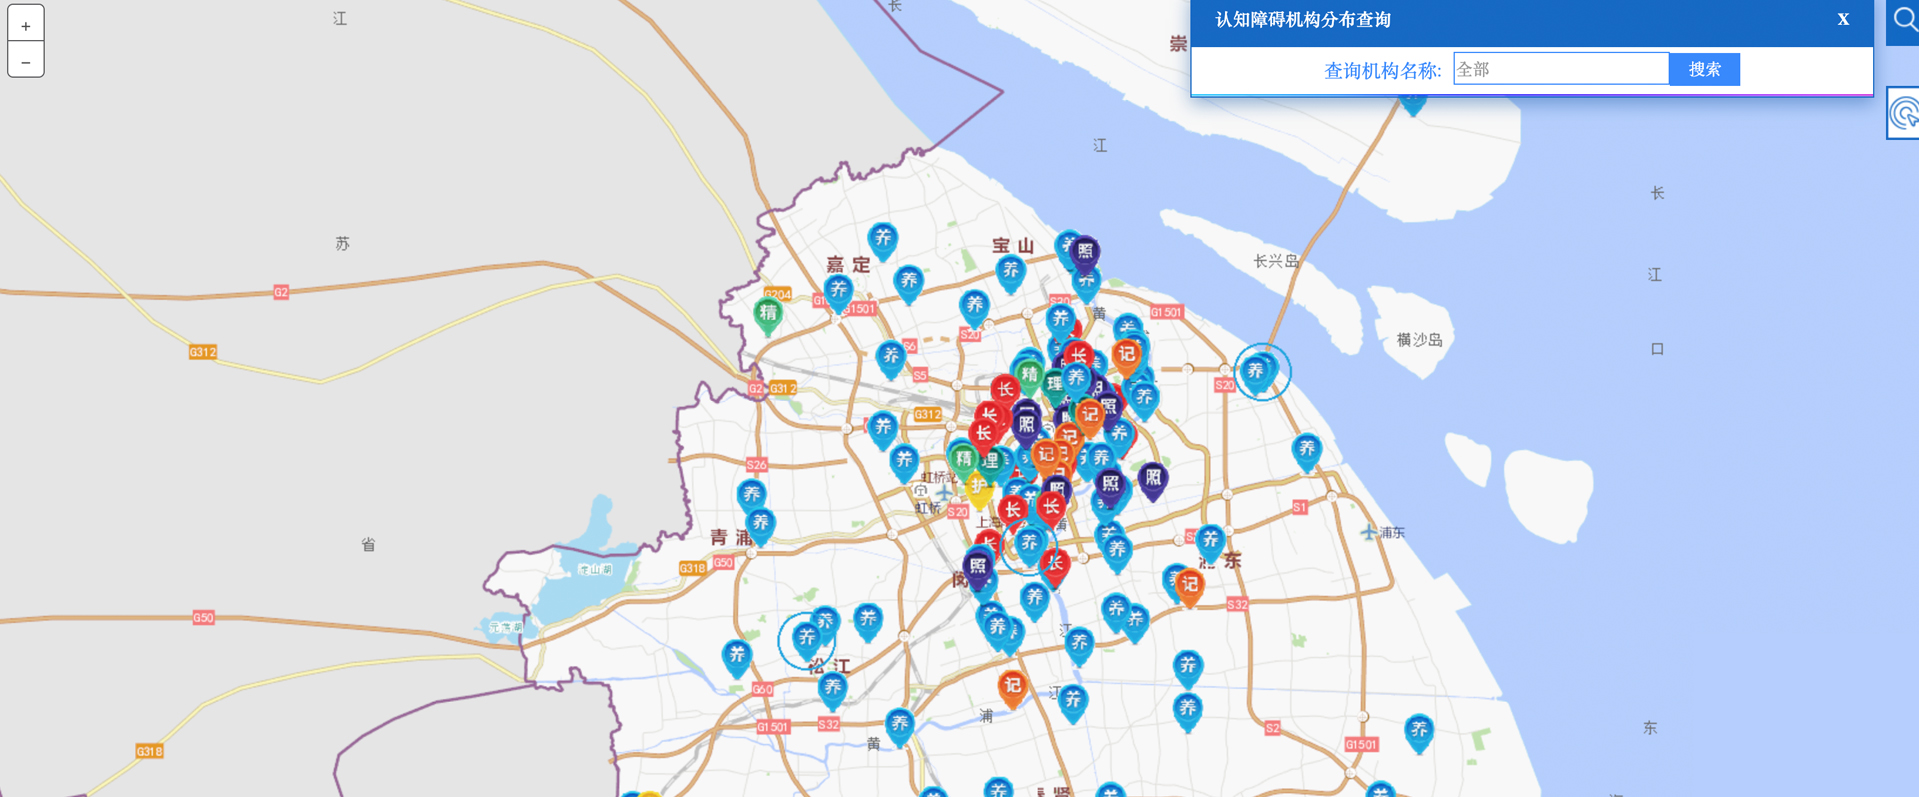 TCCI转化中心联合开发的上海认知障碍服务地图上线